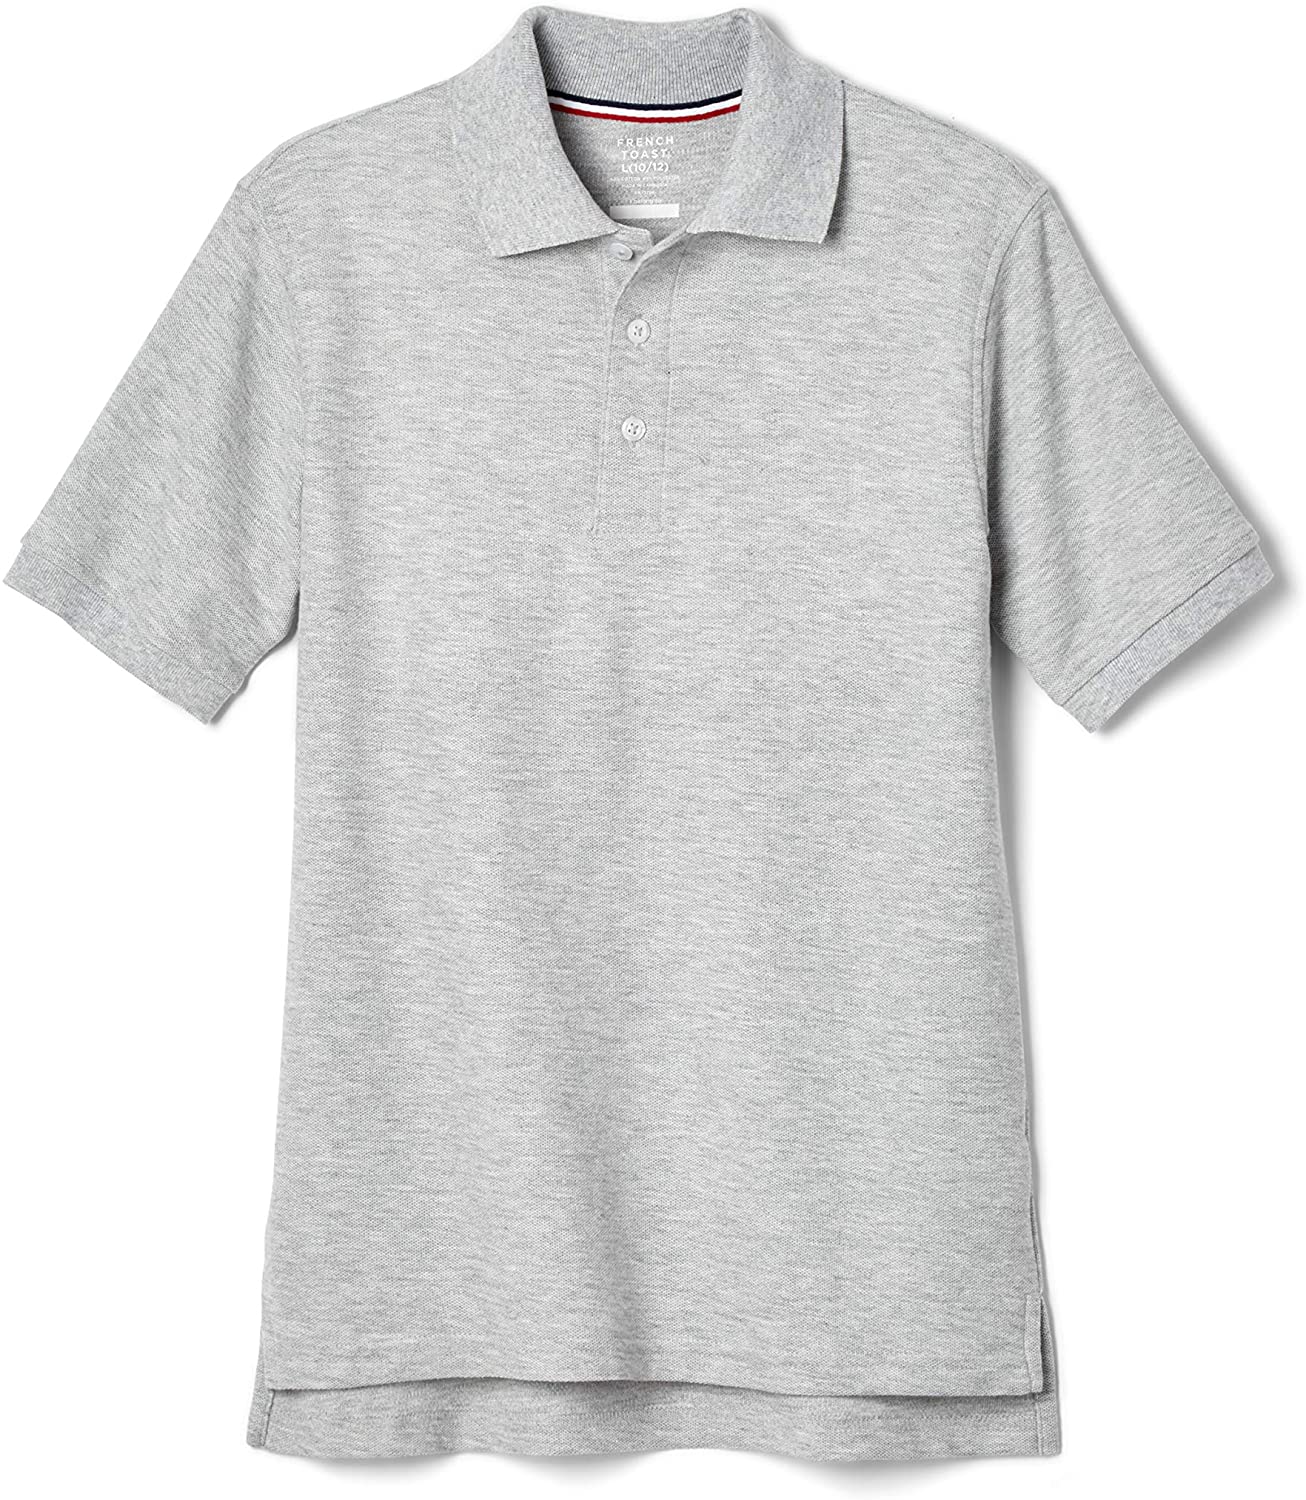 French Toast Boys Short Sleeve Pique Polo Shirt Standard & Husky